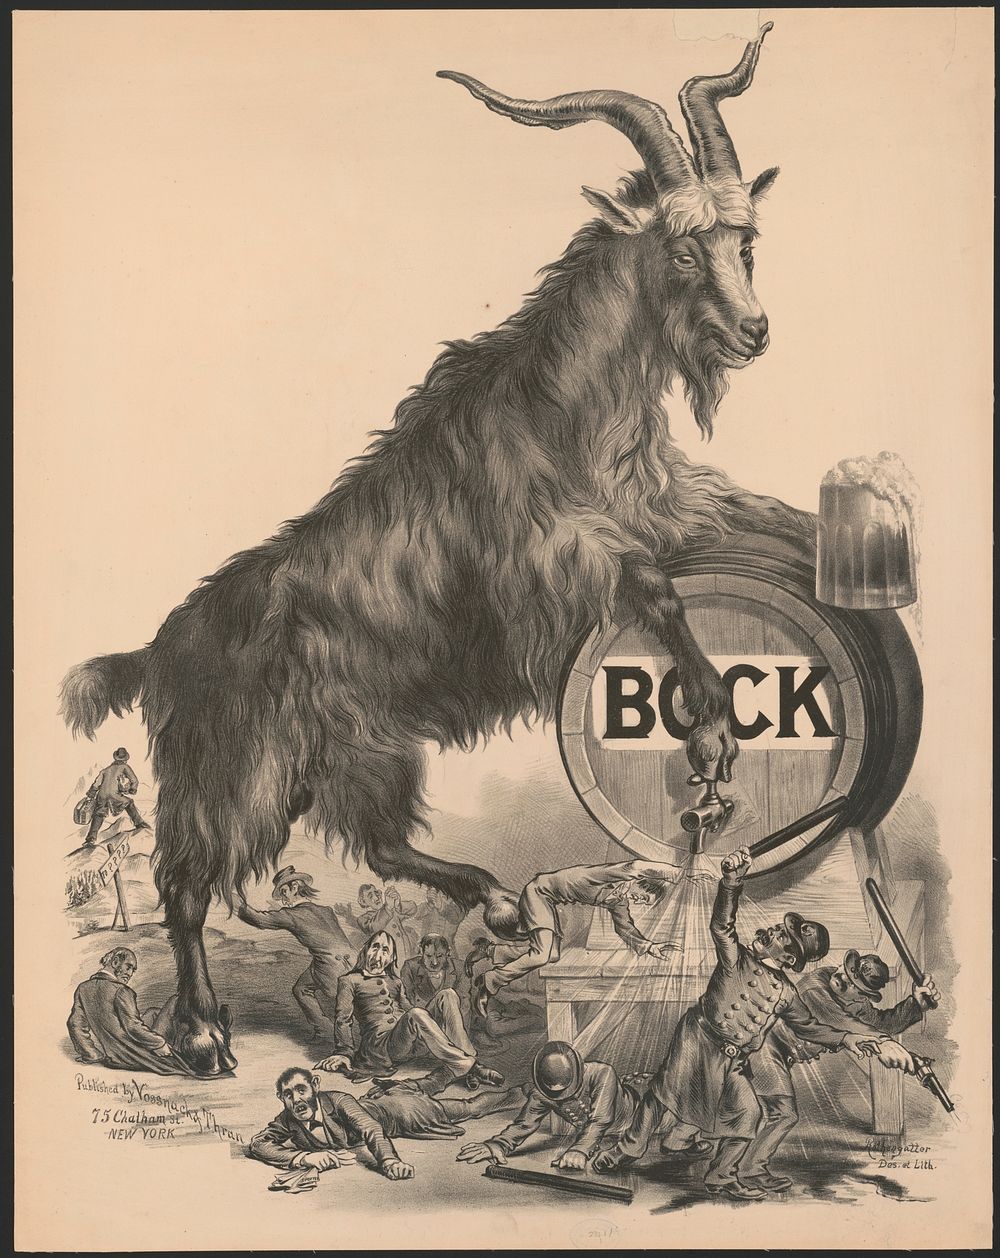 [Giant bock goat resting on a keg, holding a mug of beer, men under the goat scrambling]